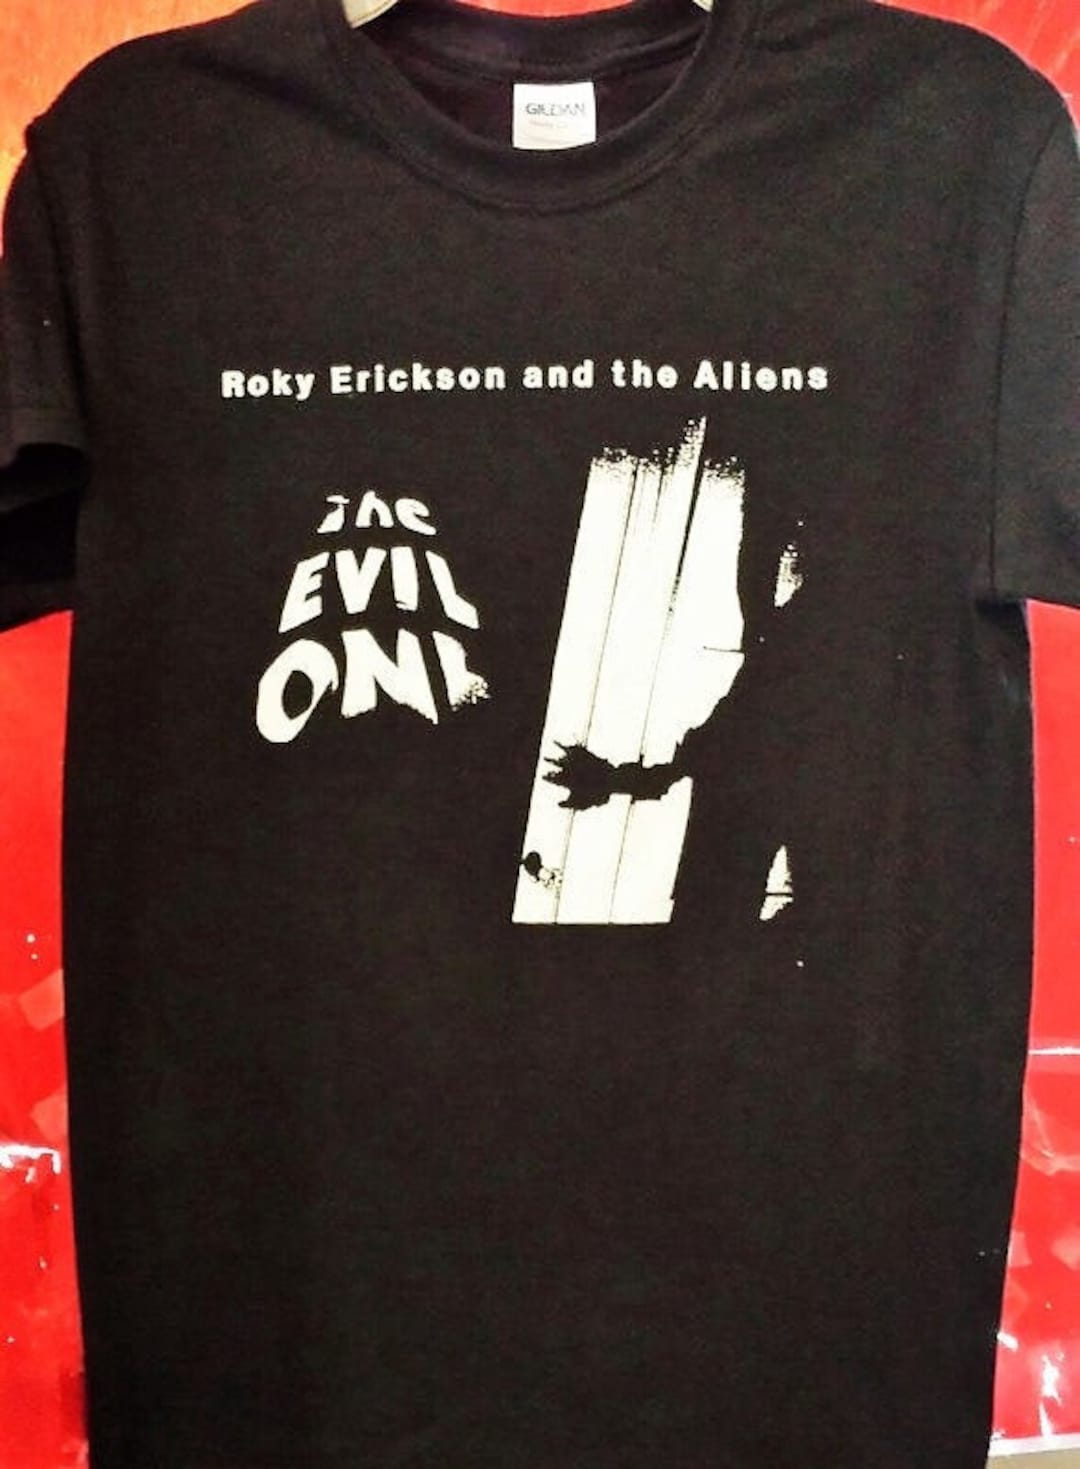 Roky Erickson True Love Cast Out All Evil Album Cover T-Shirt White